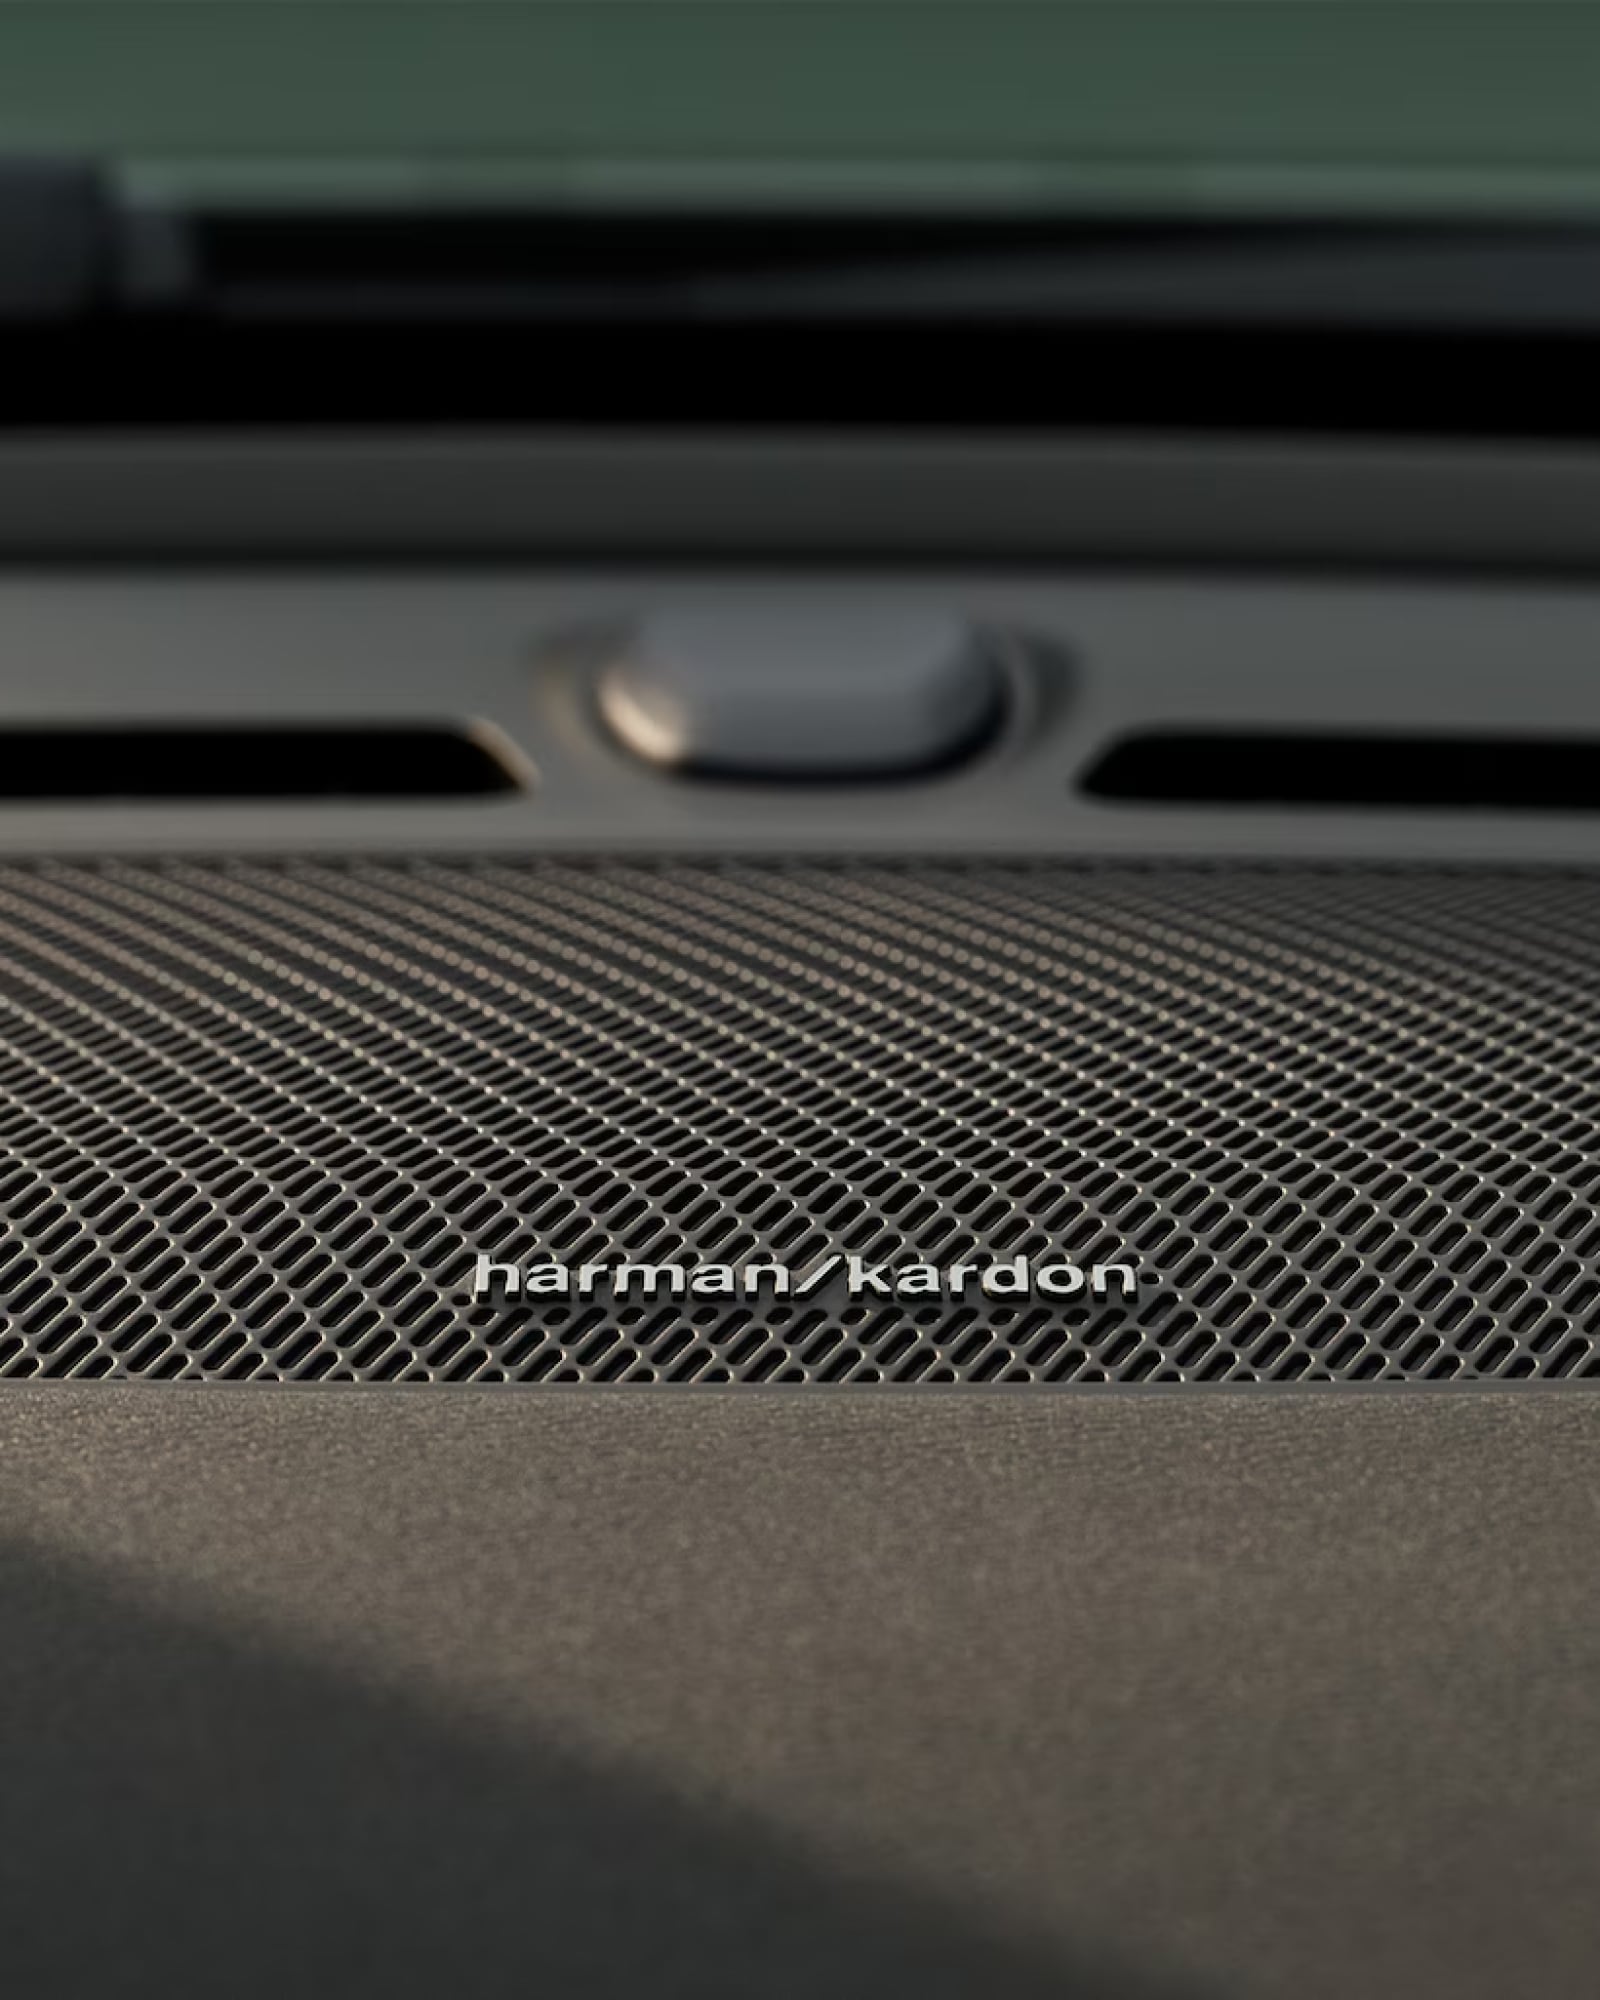 Detail image of Harman Kardon speaker in a Volvo XC40.